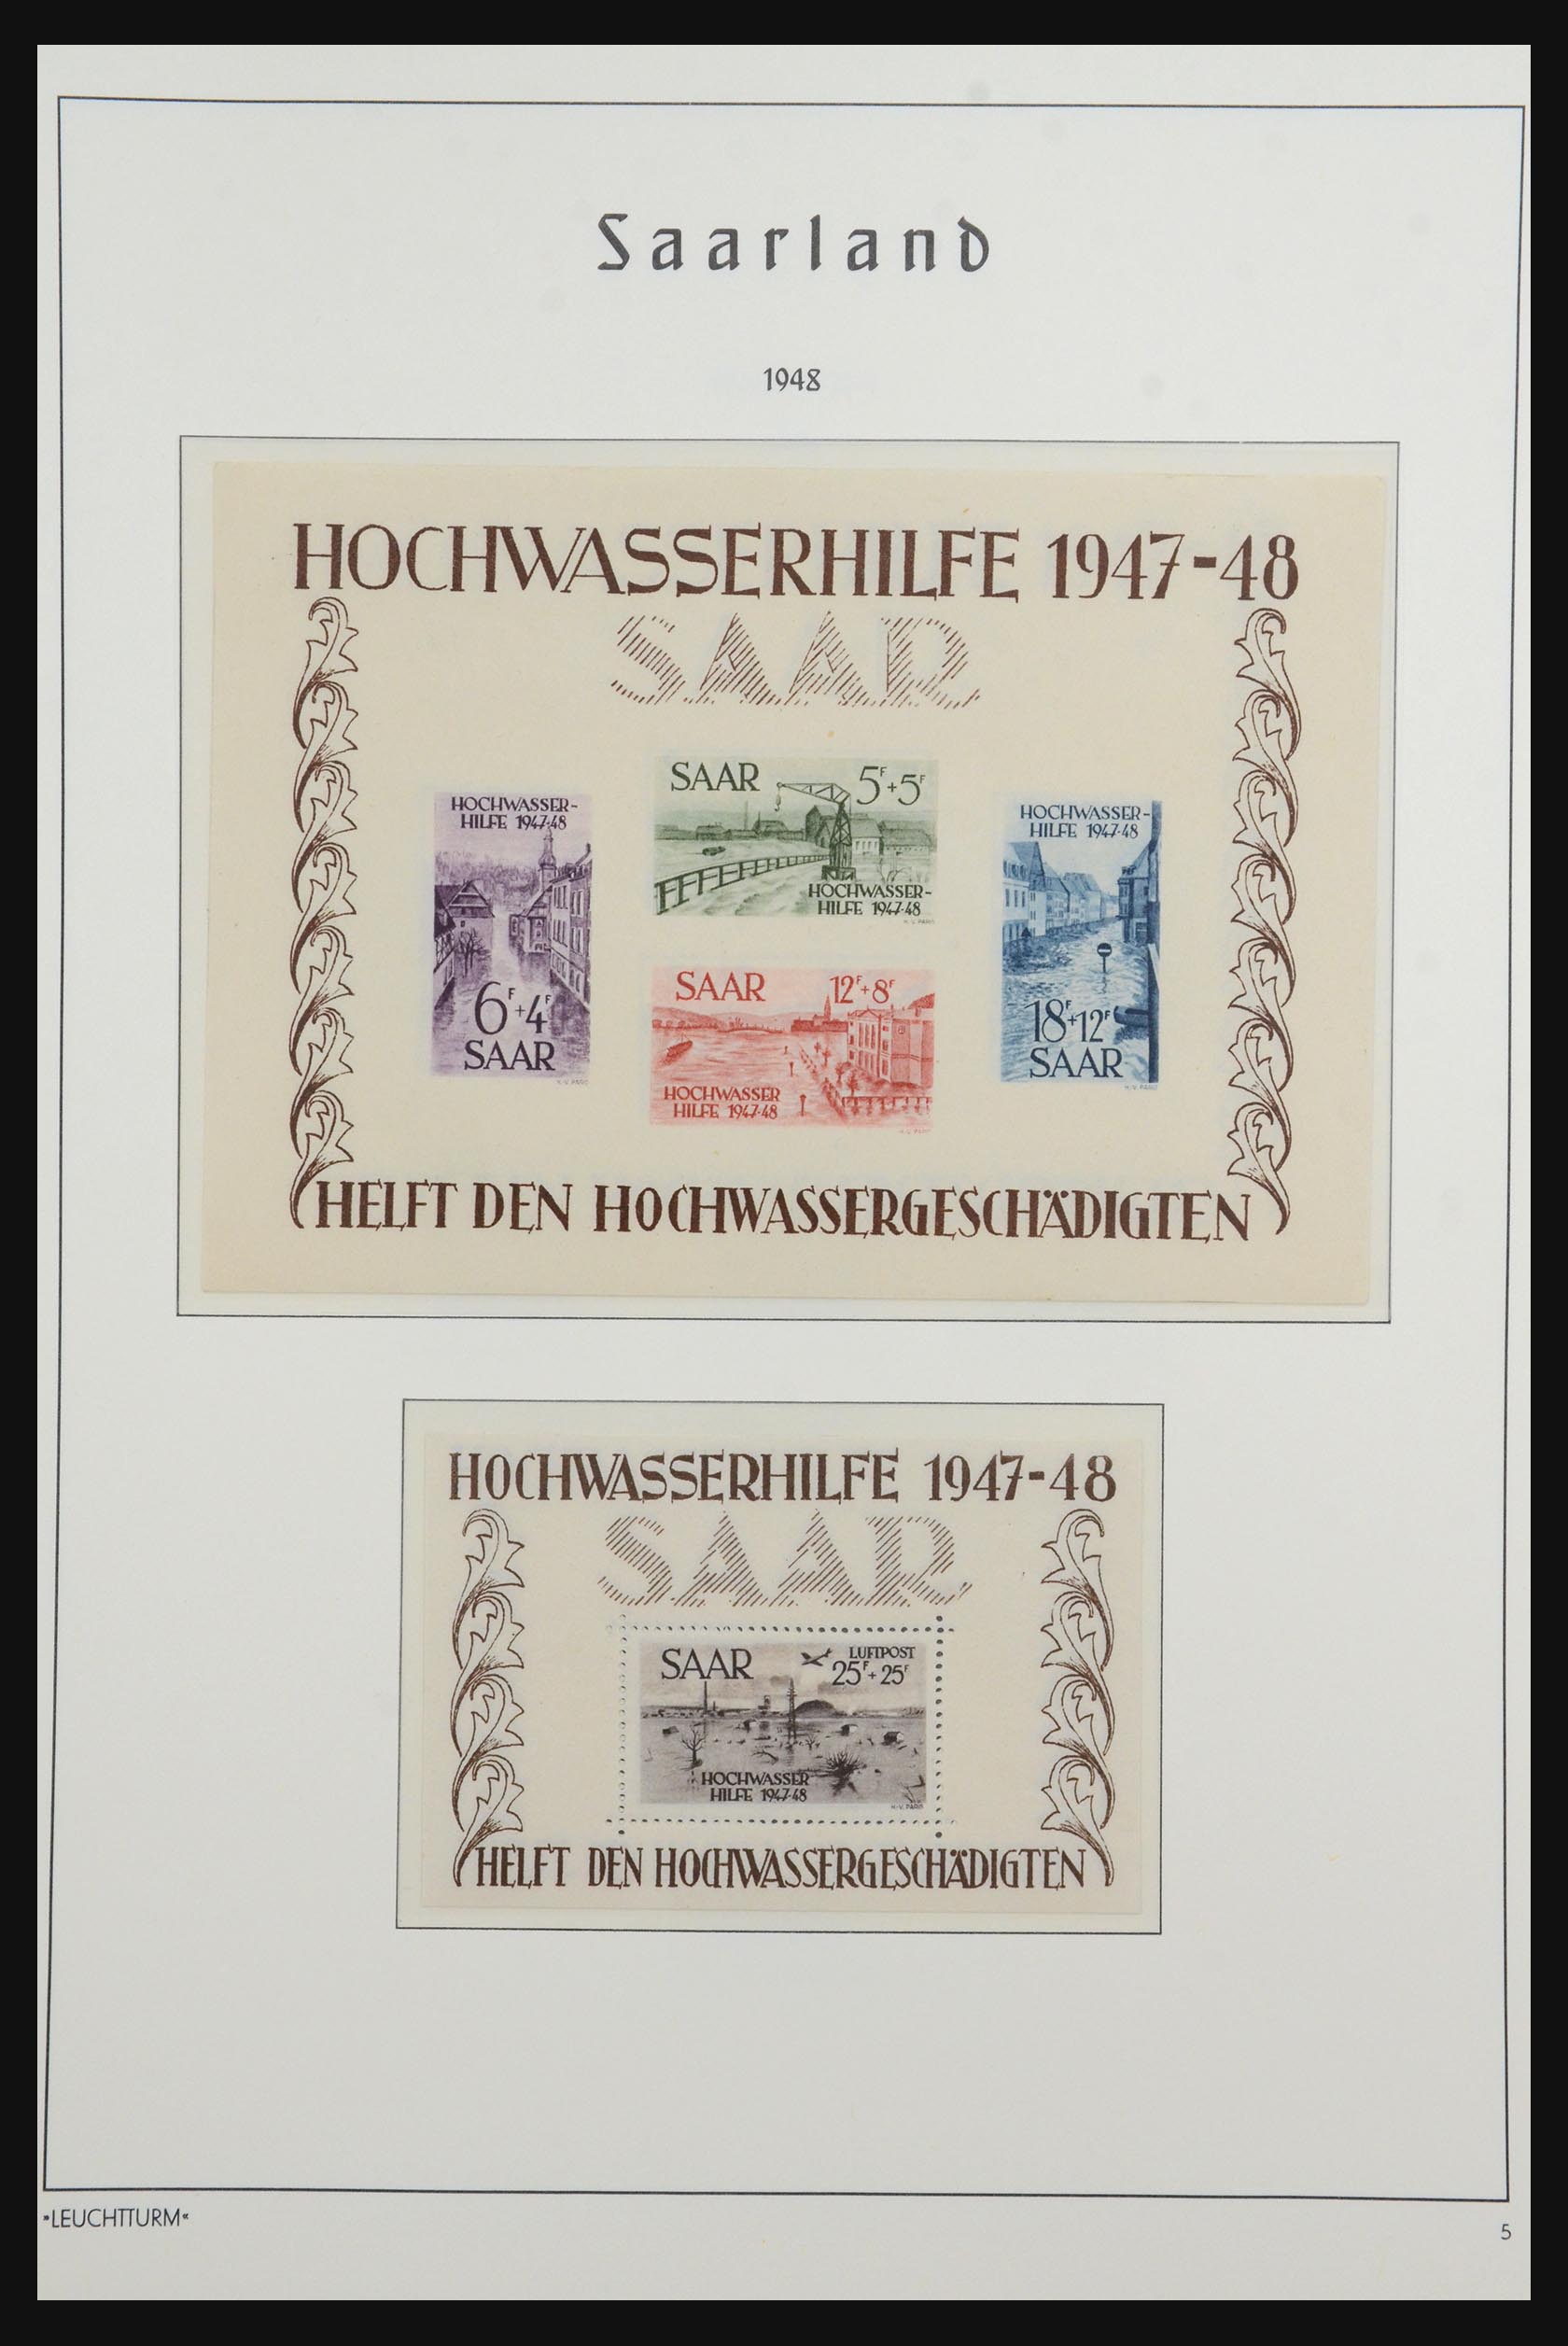 31601 091 - 31601 Bundespost, Berlin and Saar 1948-2008.